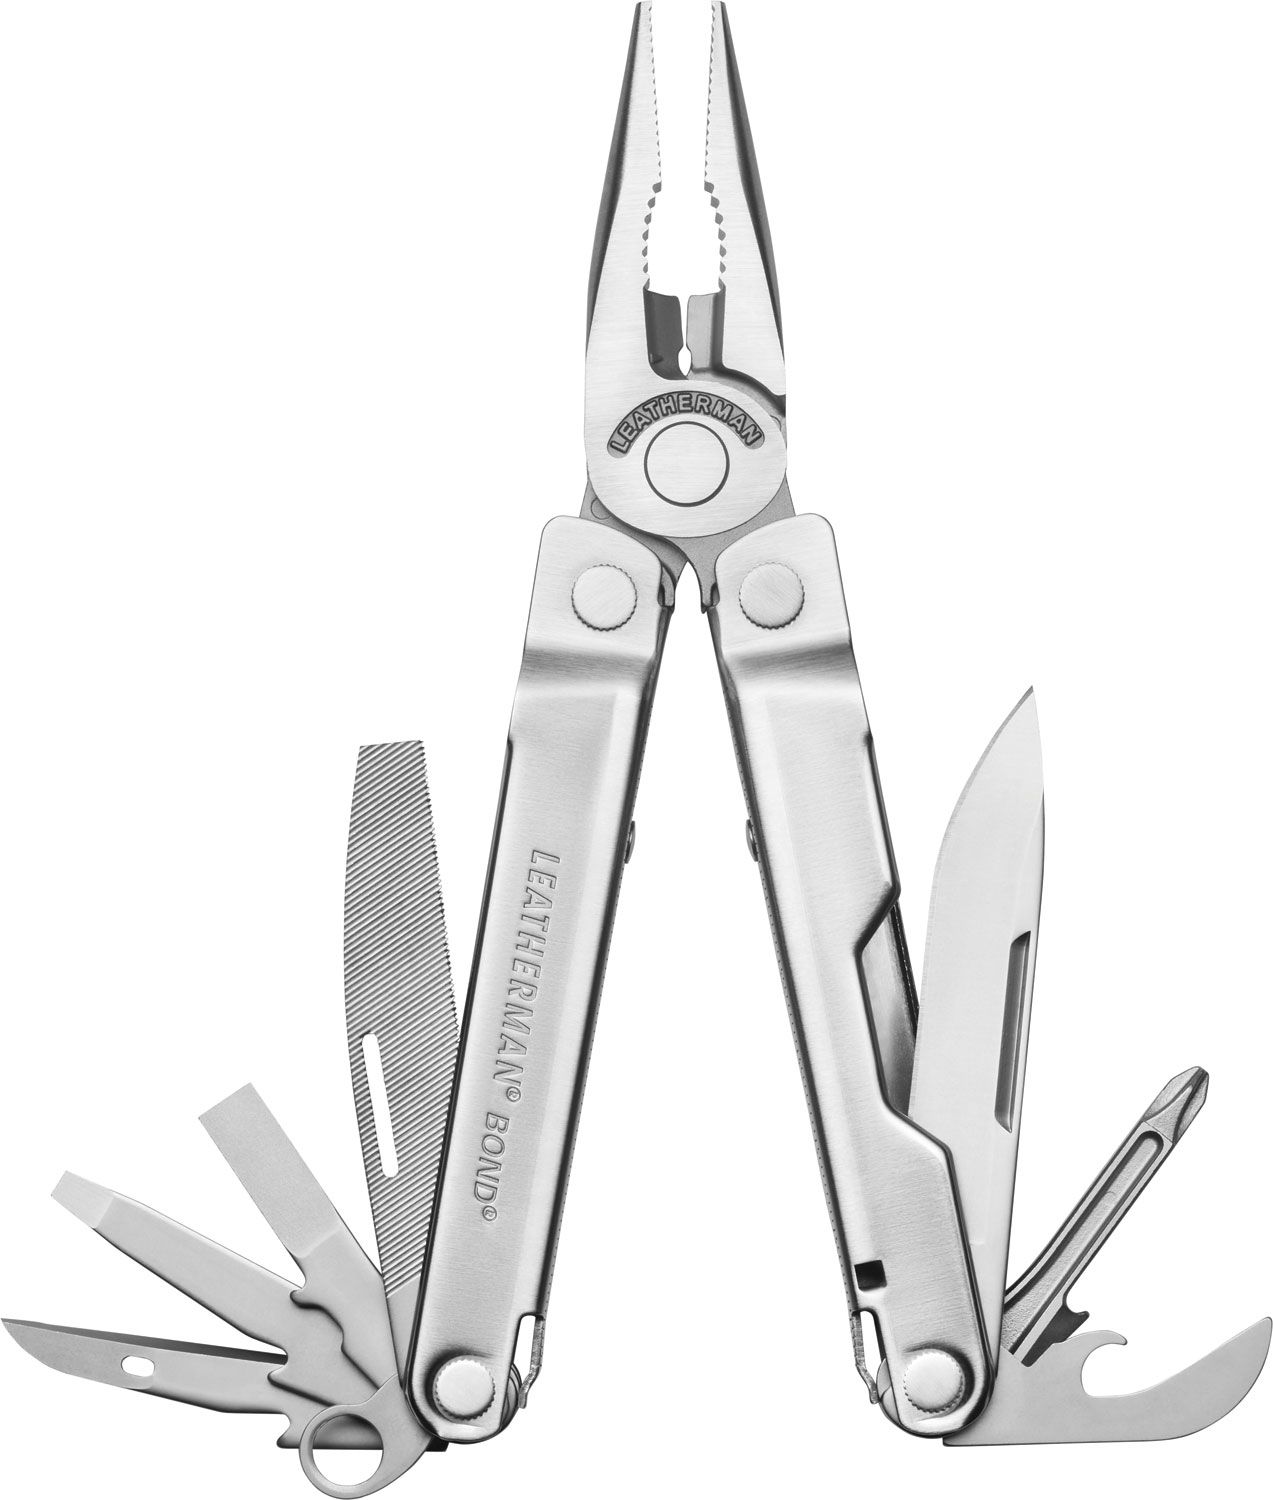 Leatherman Bond Full-Size Multi-Tool, Stainless Steel, Black Nylon Sheath -  KnifeCenter - 832934